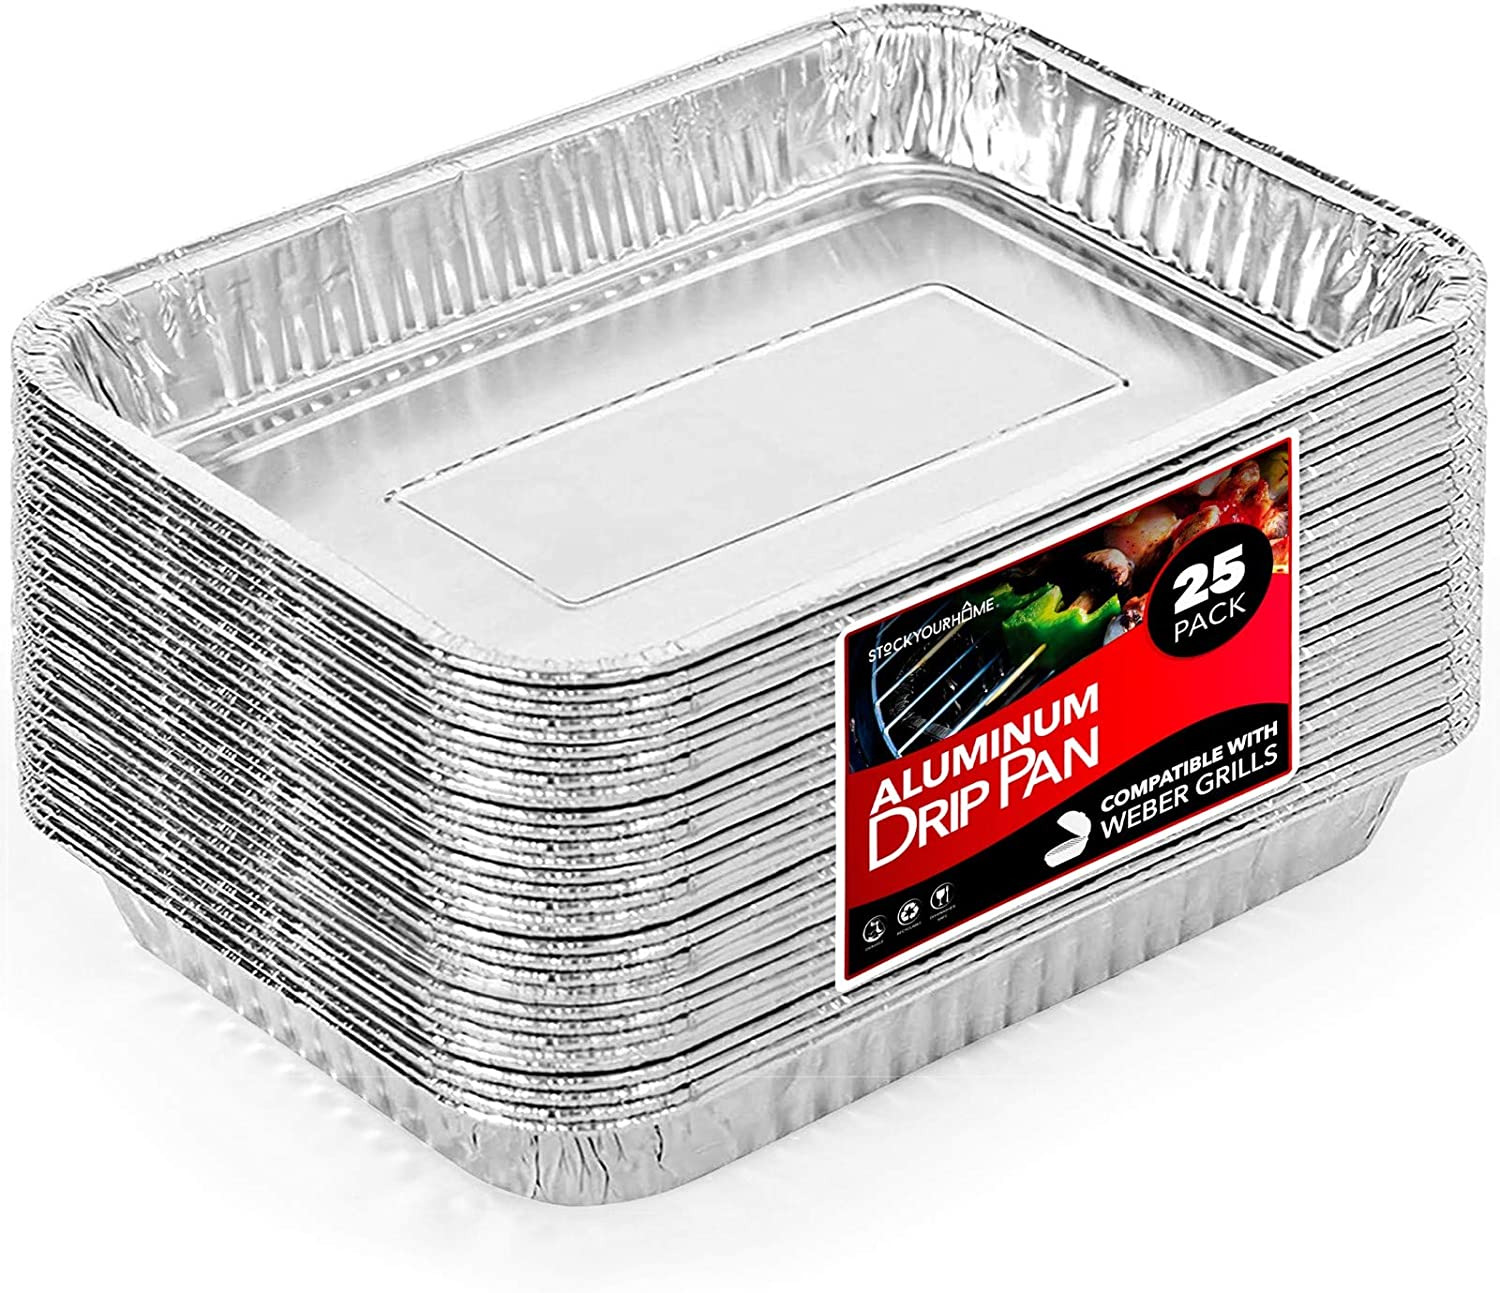 Stock Your Home 1.25” Aluminum Drip Pan (25 Count) Disposable Foil